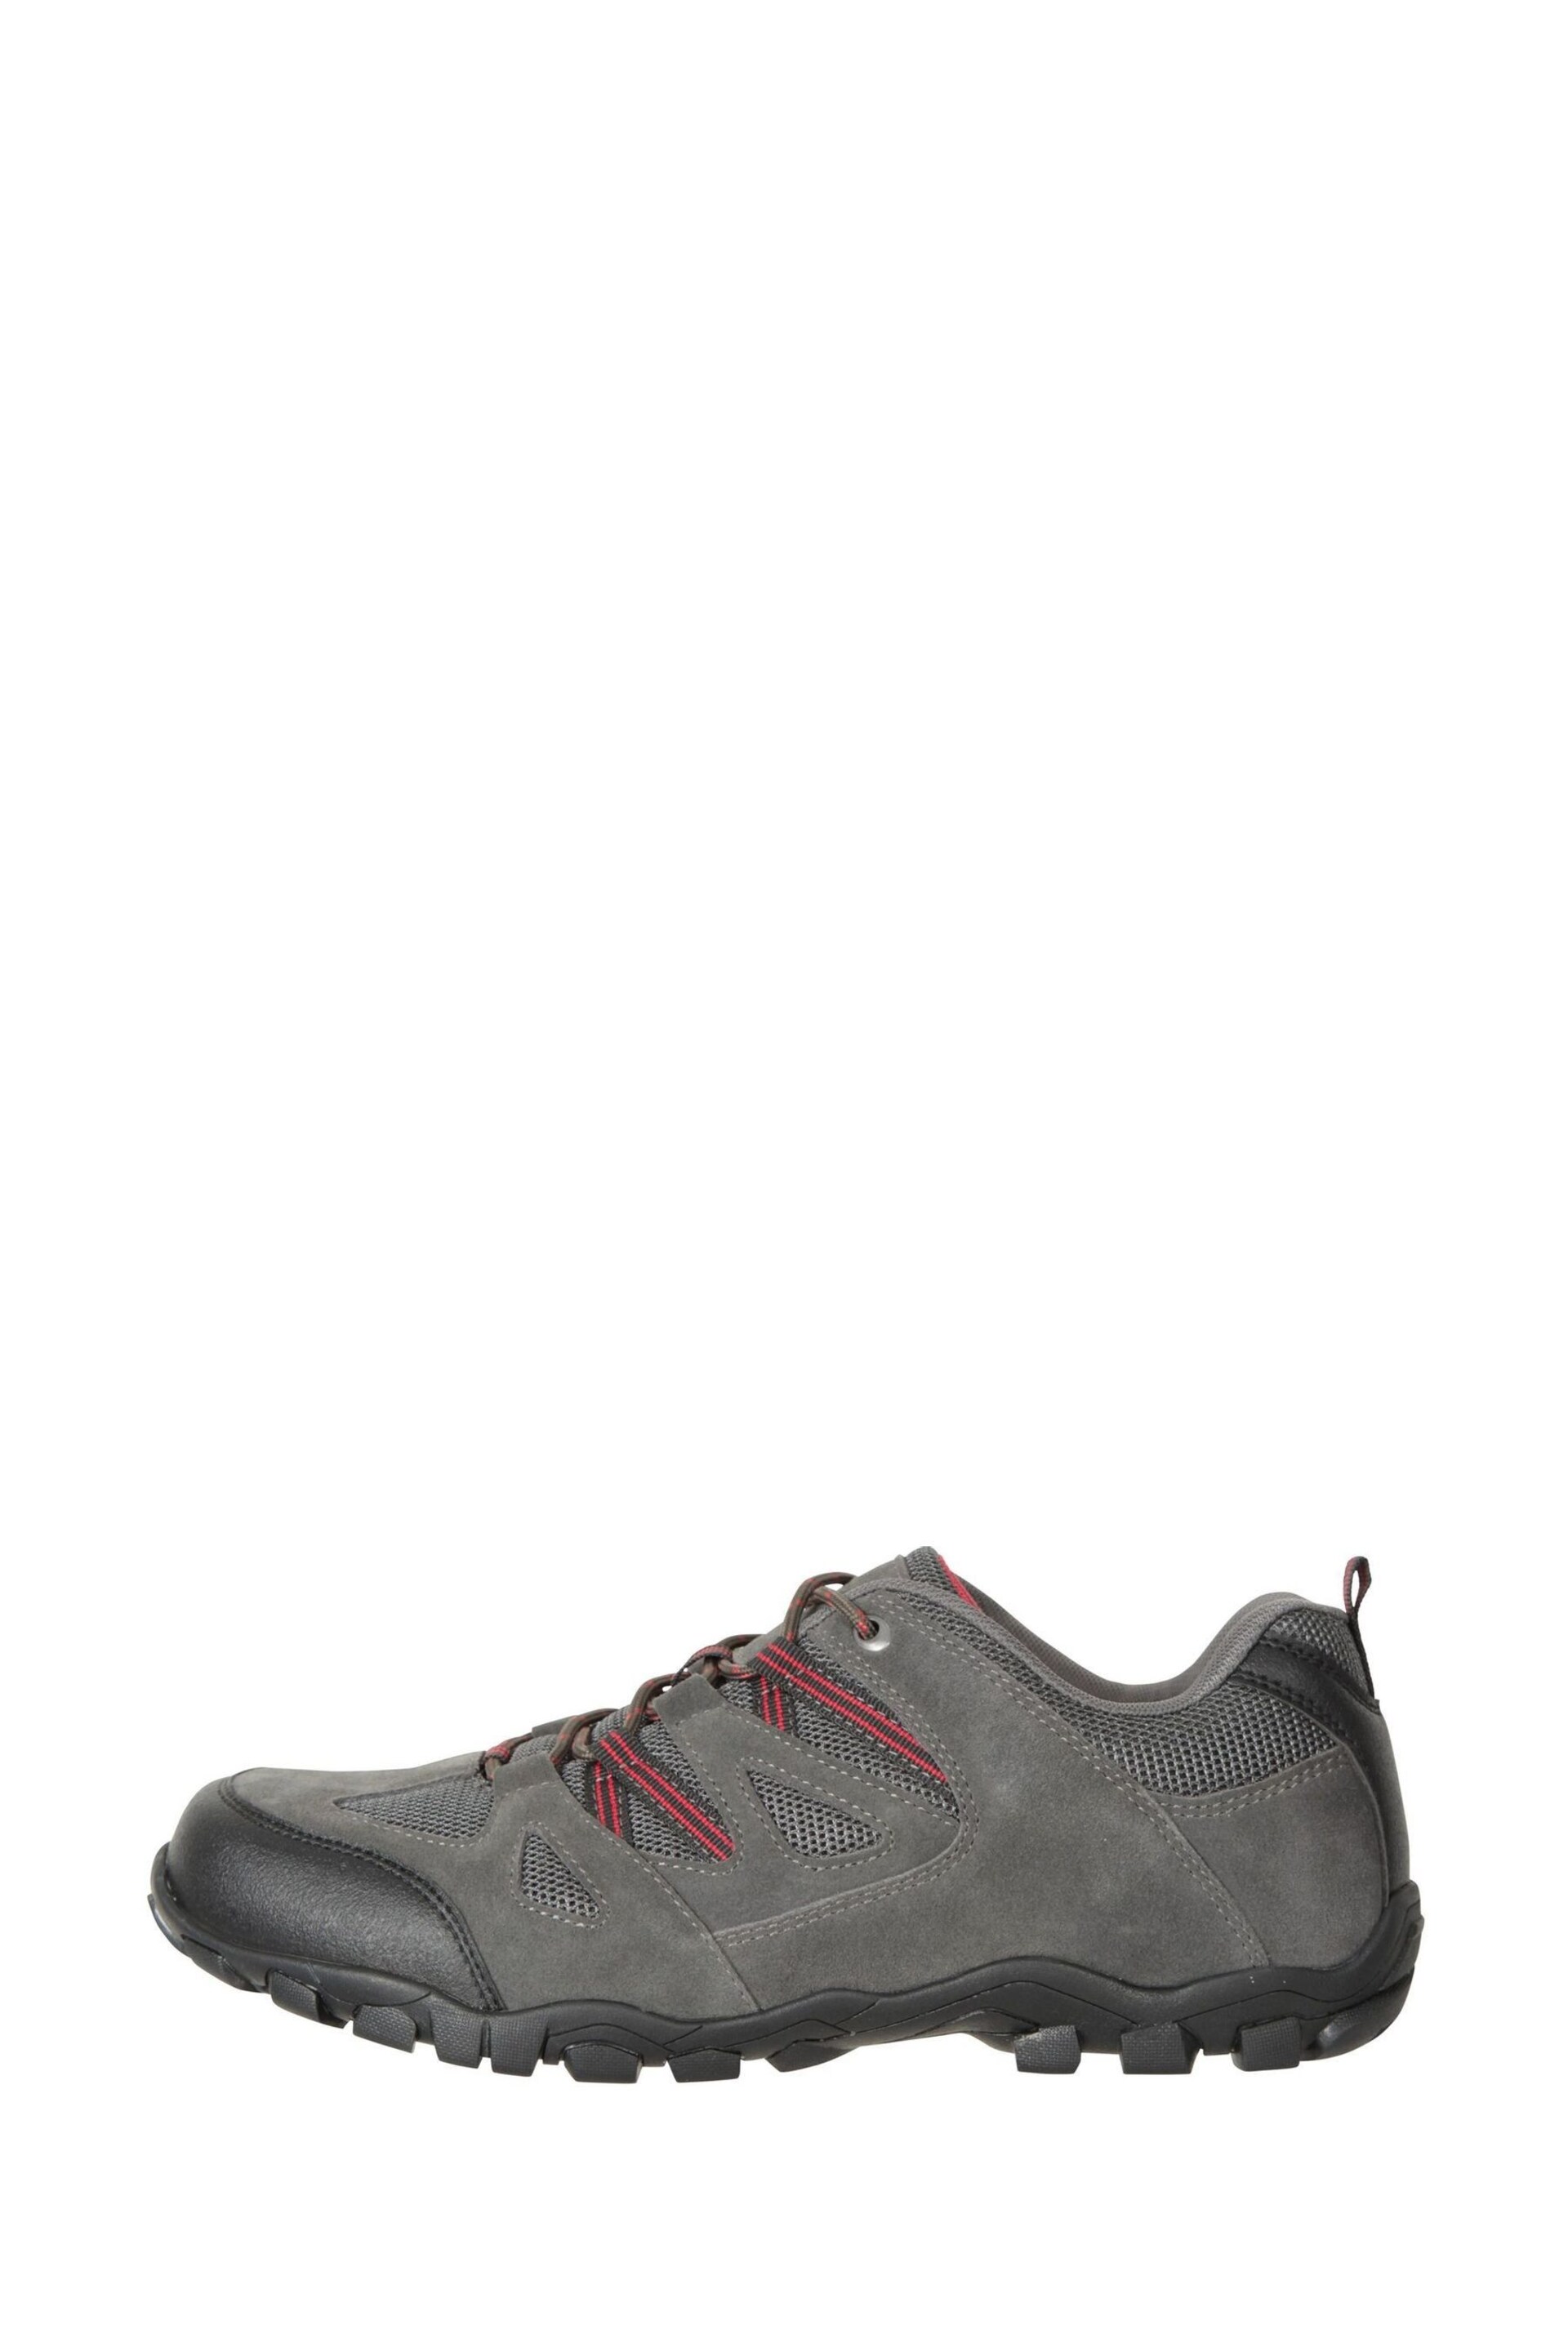 Mountain Warehouse Grey Mens Outdoor III Walking Shoes - Image 3 of 5